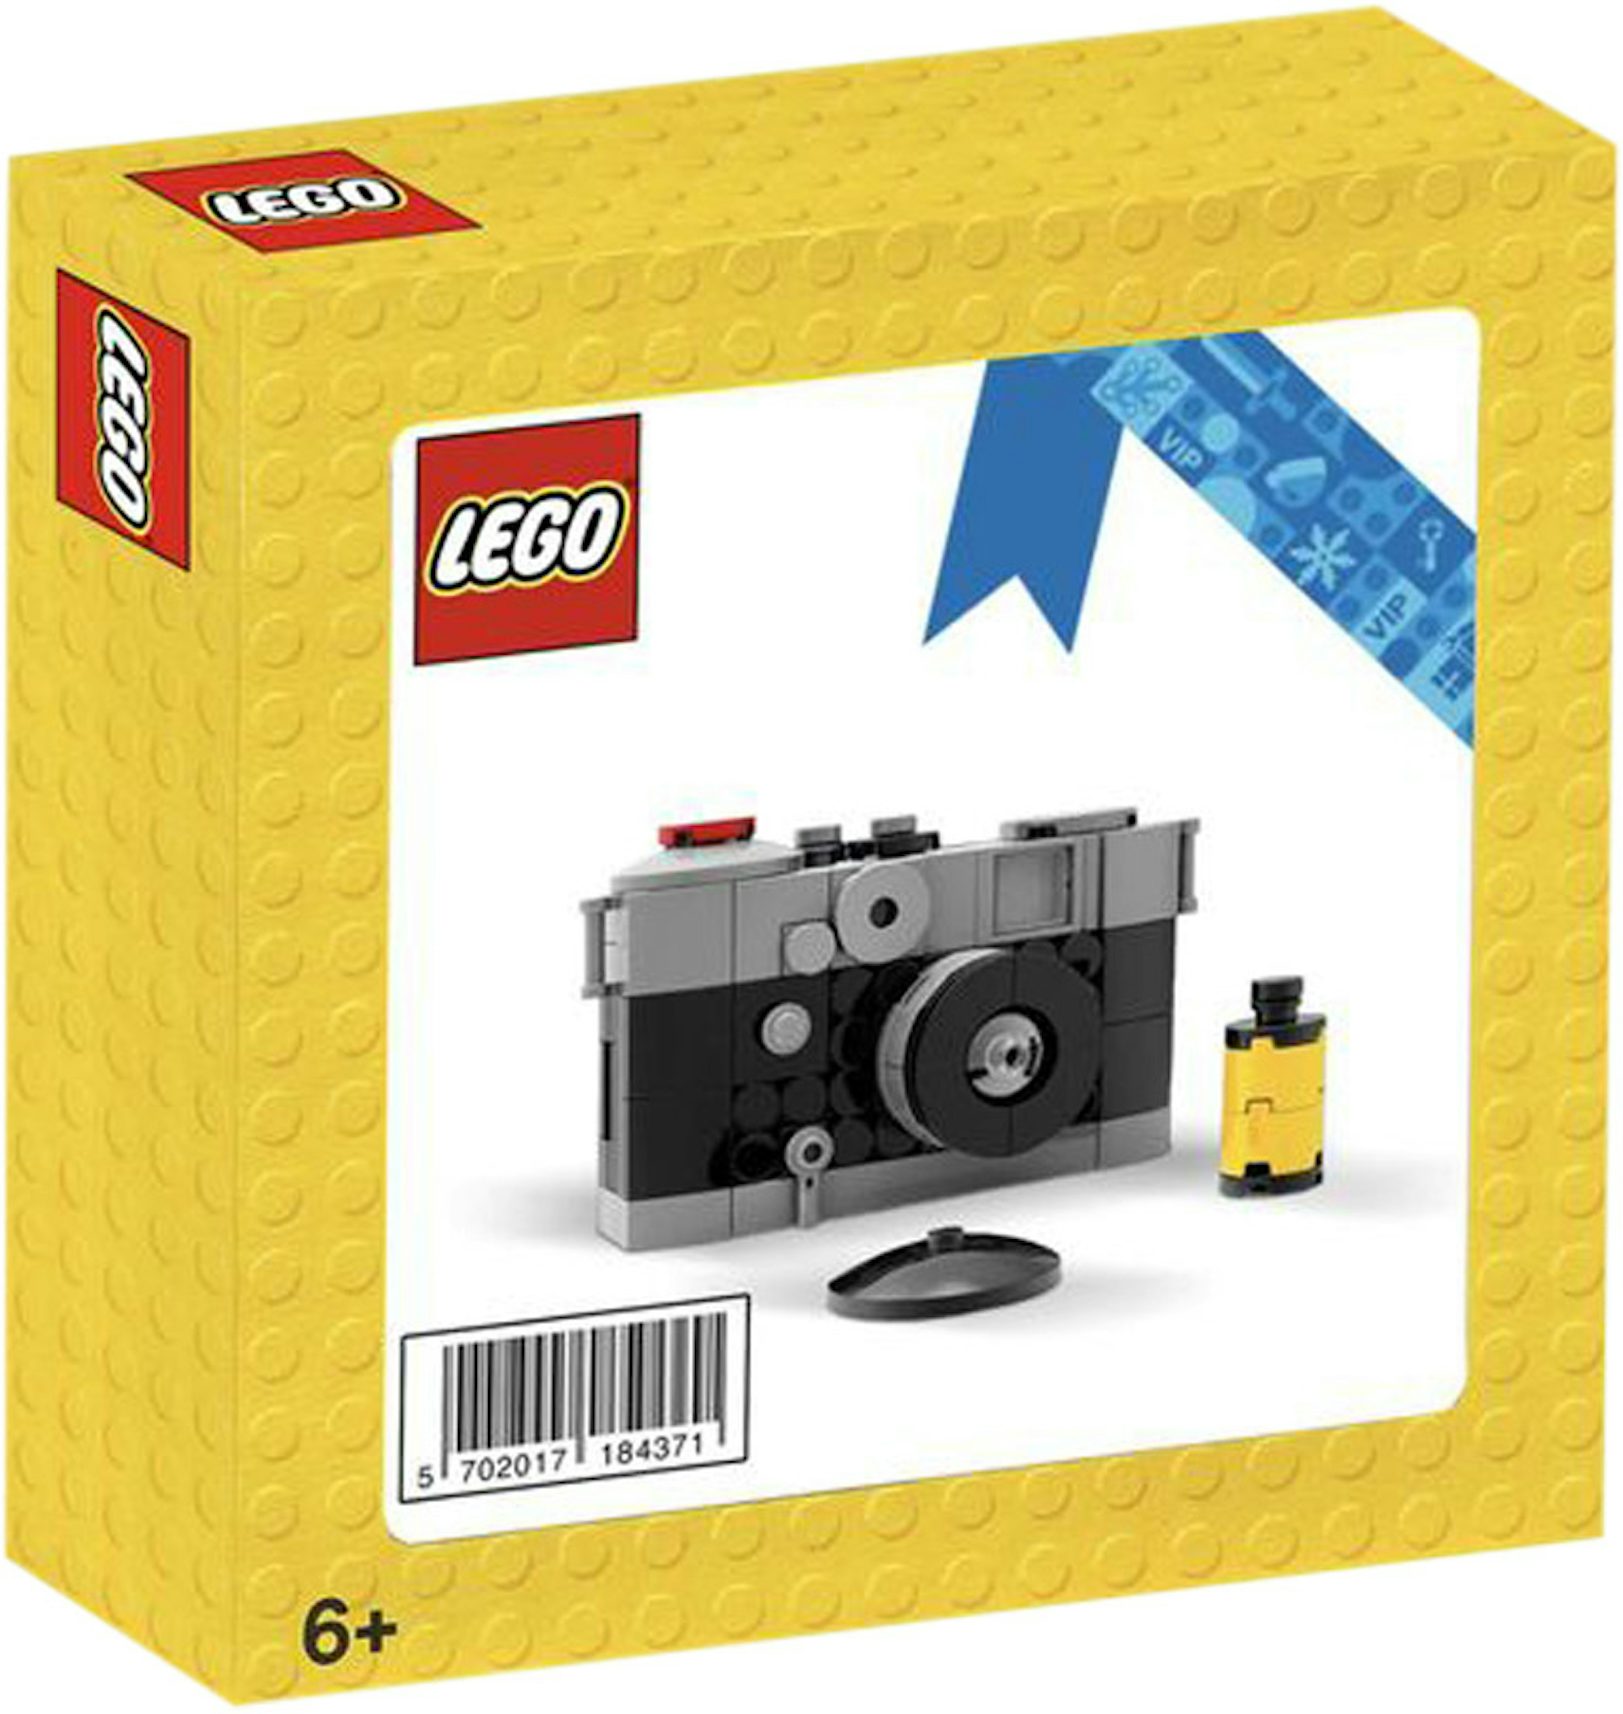 LEGO Vintage Camera Set 6392344 / 6392343 - FW21 - US